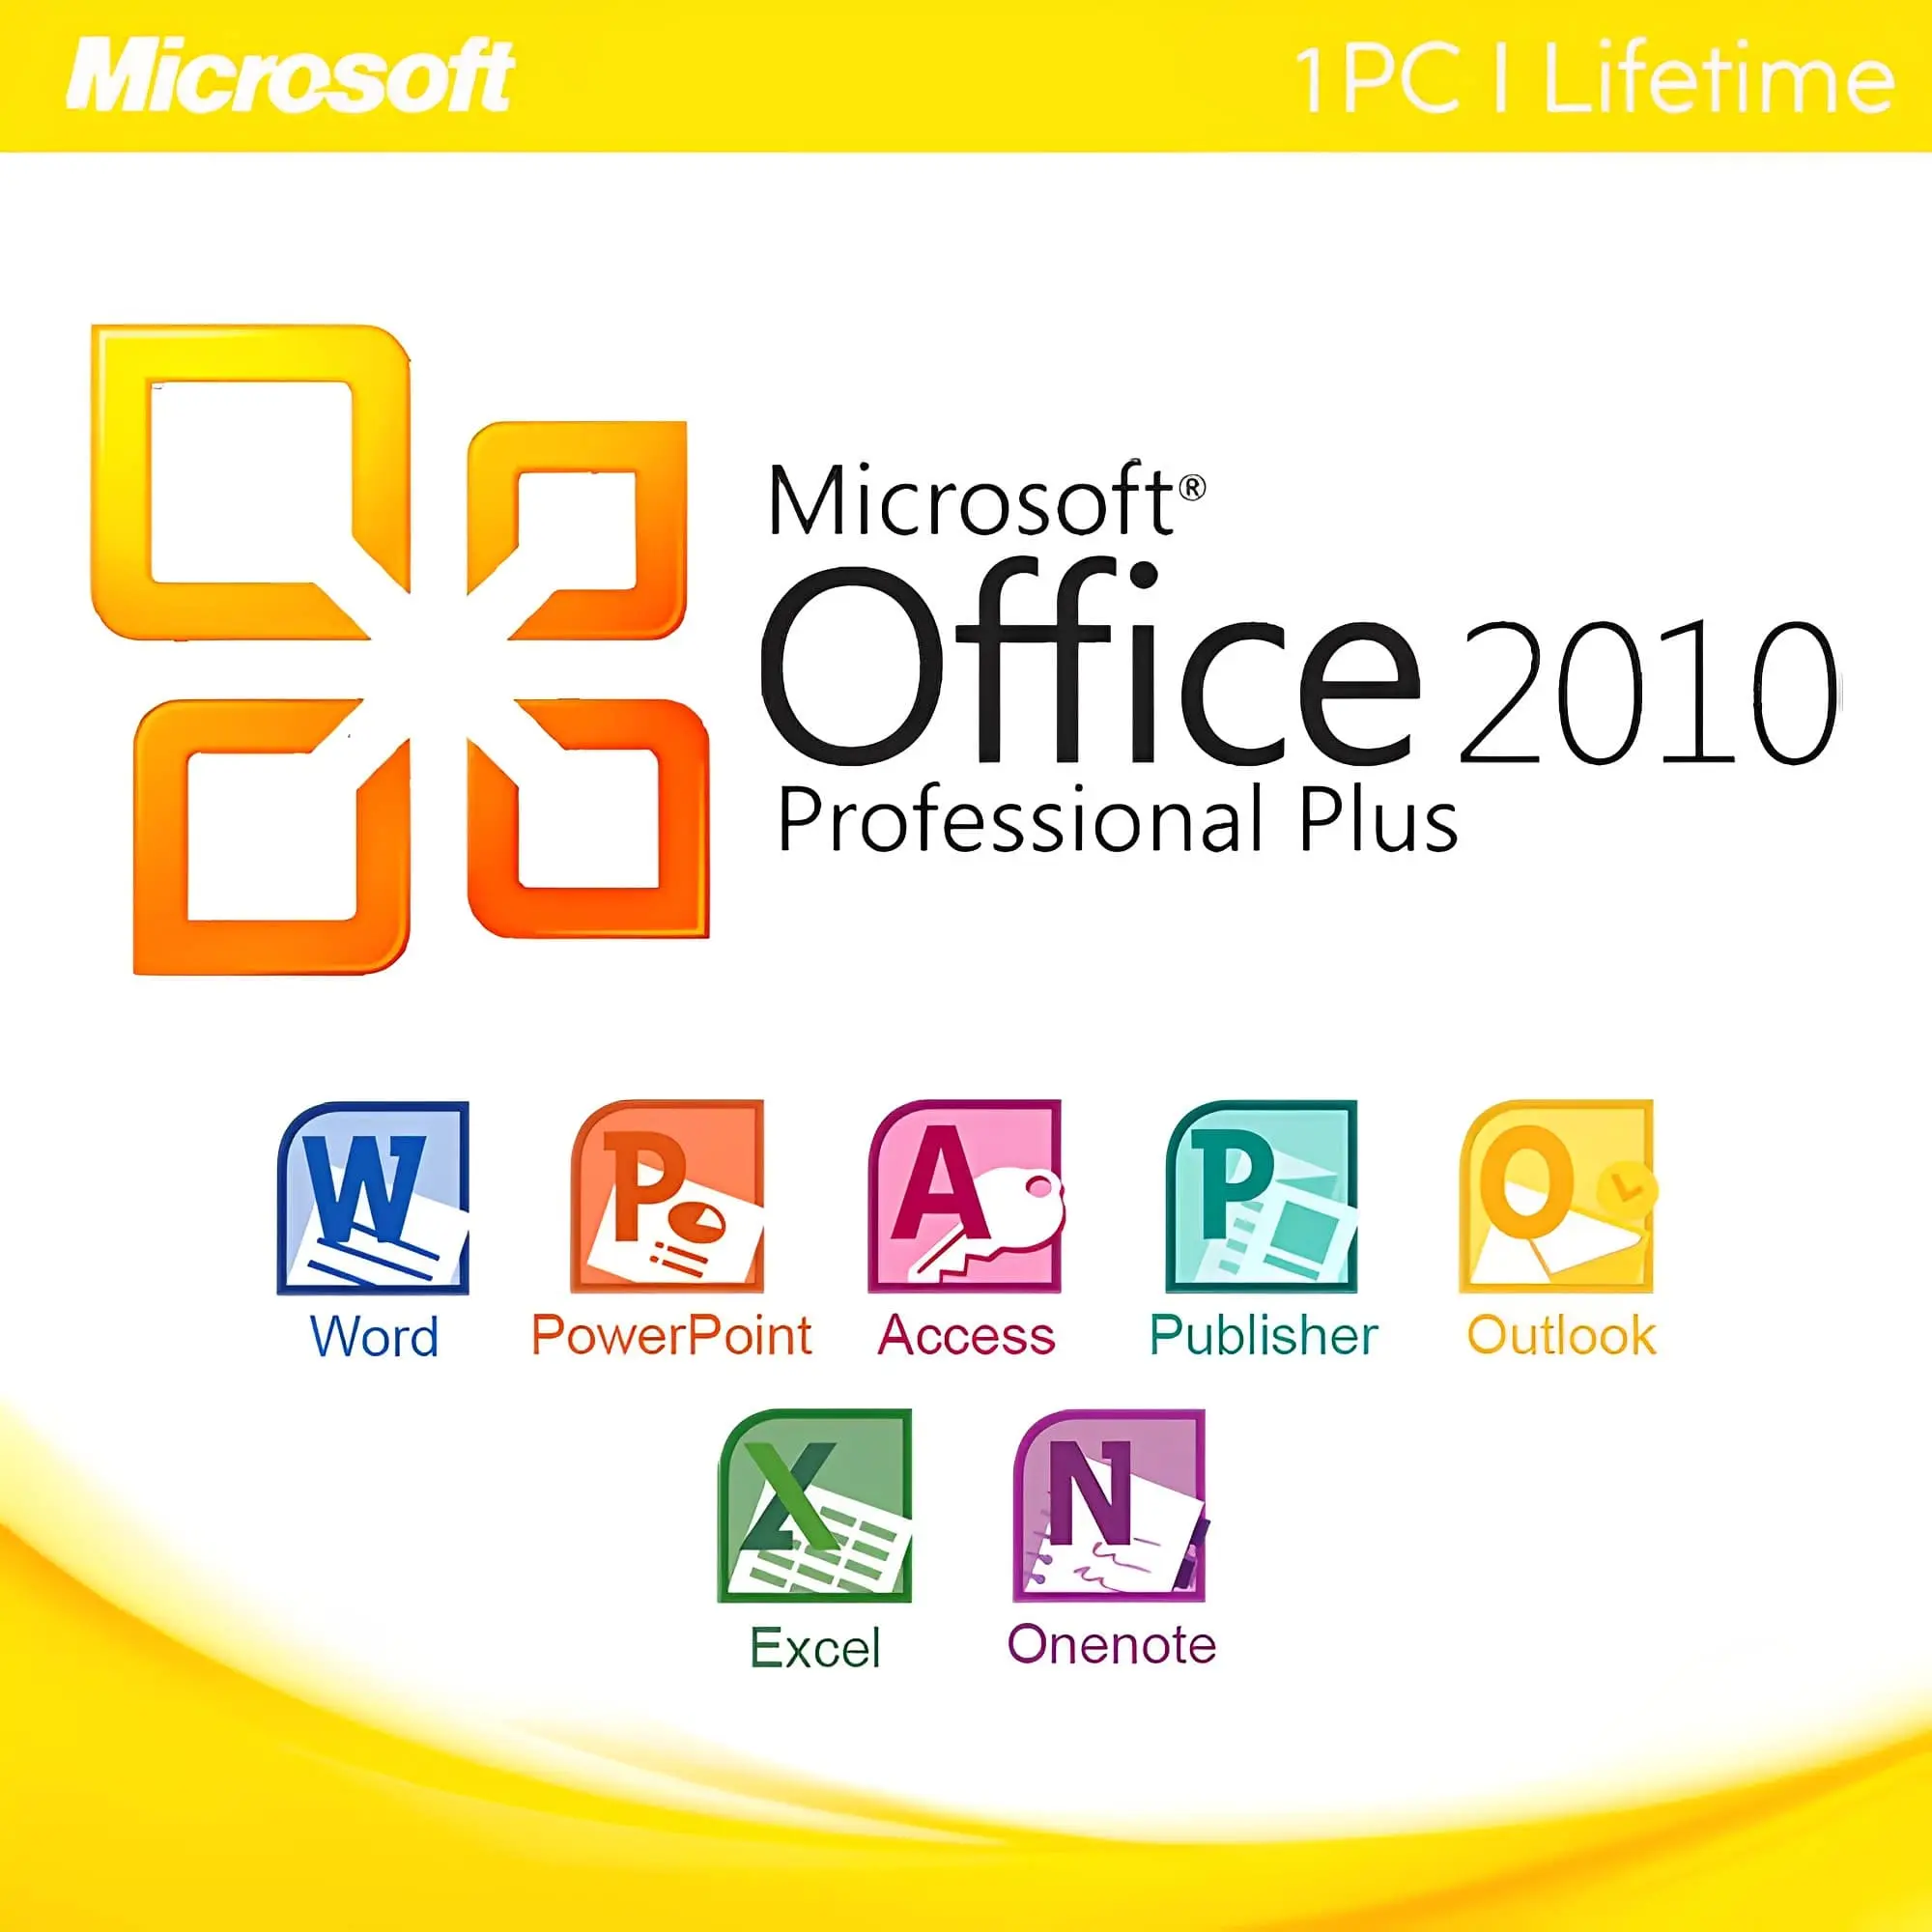 Buy Microsoft Office 2010 Professional Plus | Flixeasy